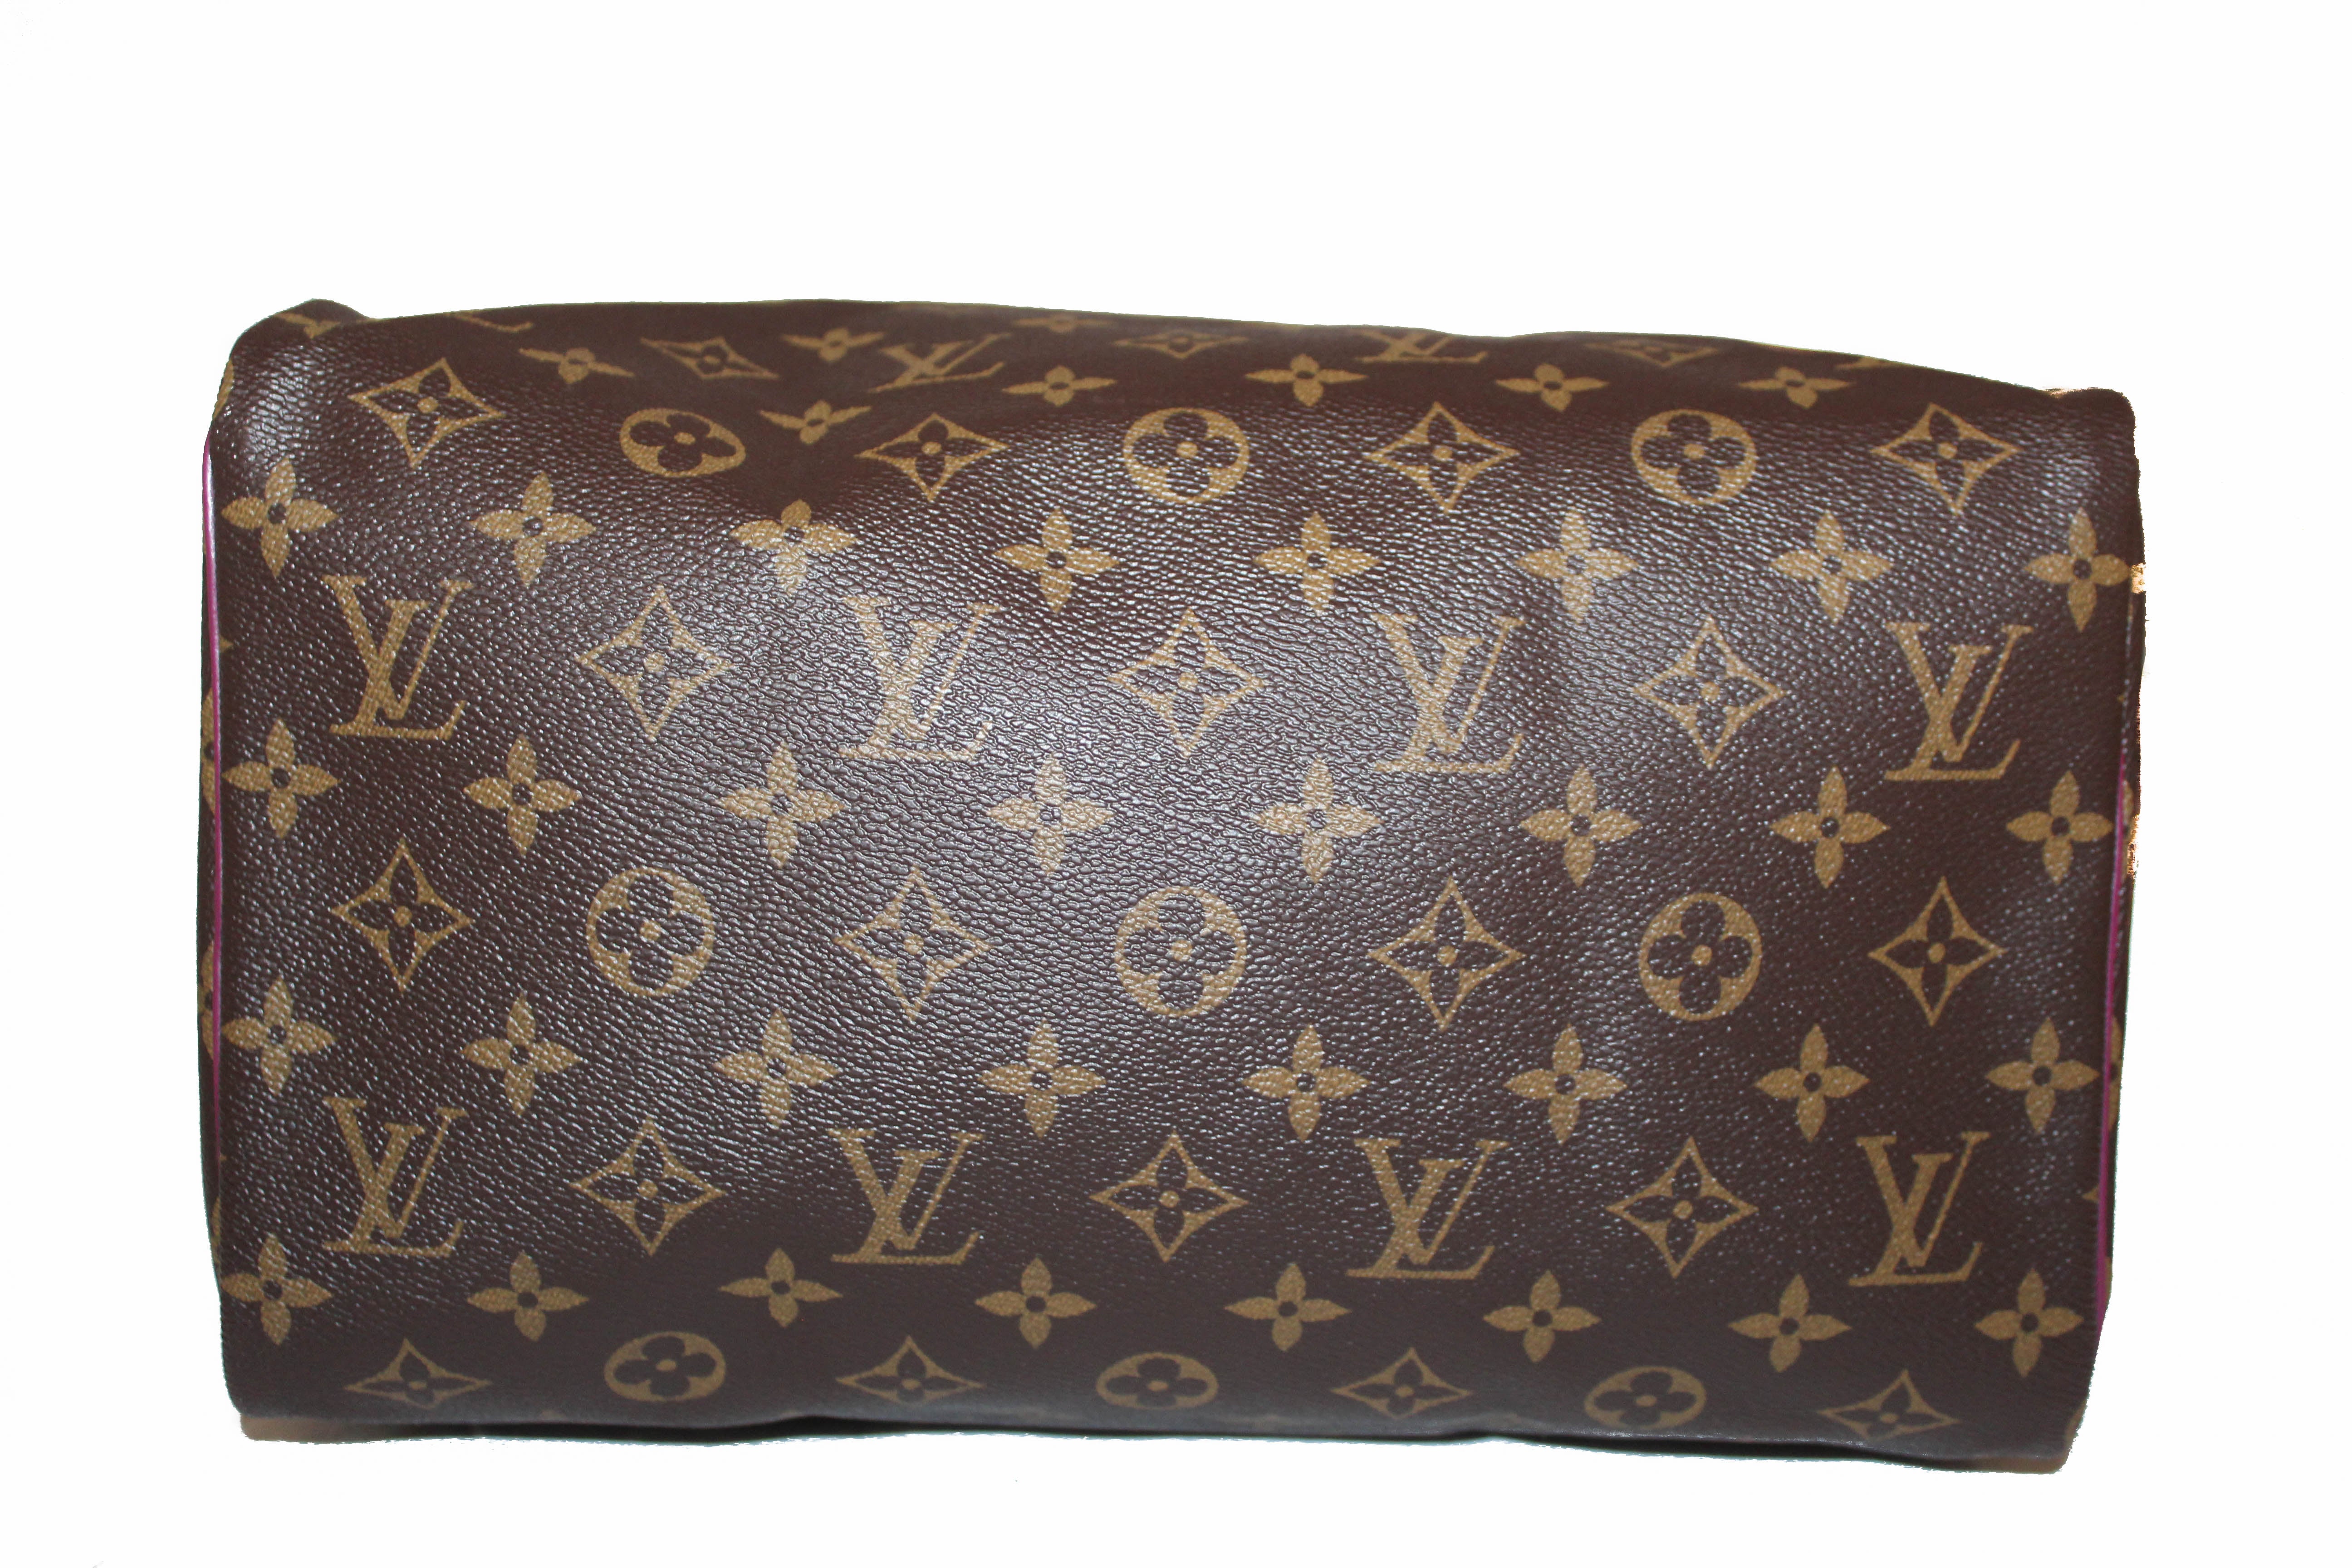 Authentic Louis Vuitton Limited Edition Totem Monogram Canvas Speedy 30 Handbag